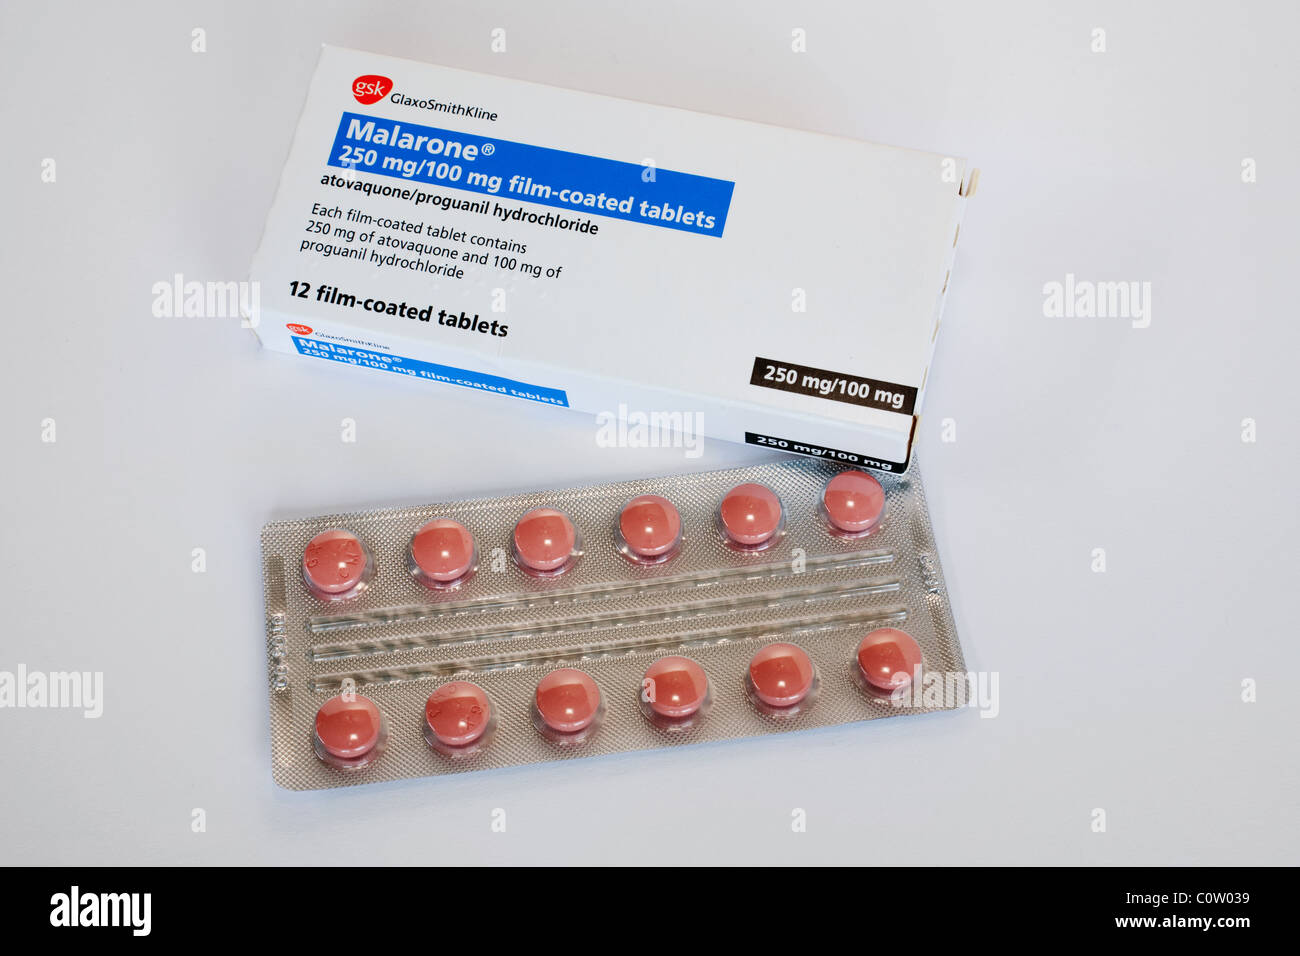 Malaria tablets -Fotos und -Bildmaterial in hoher Auflösung – Alamy